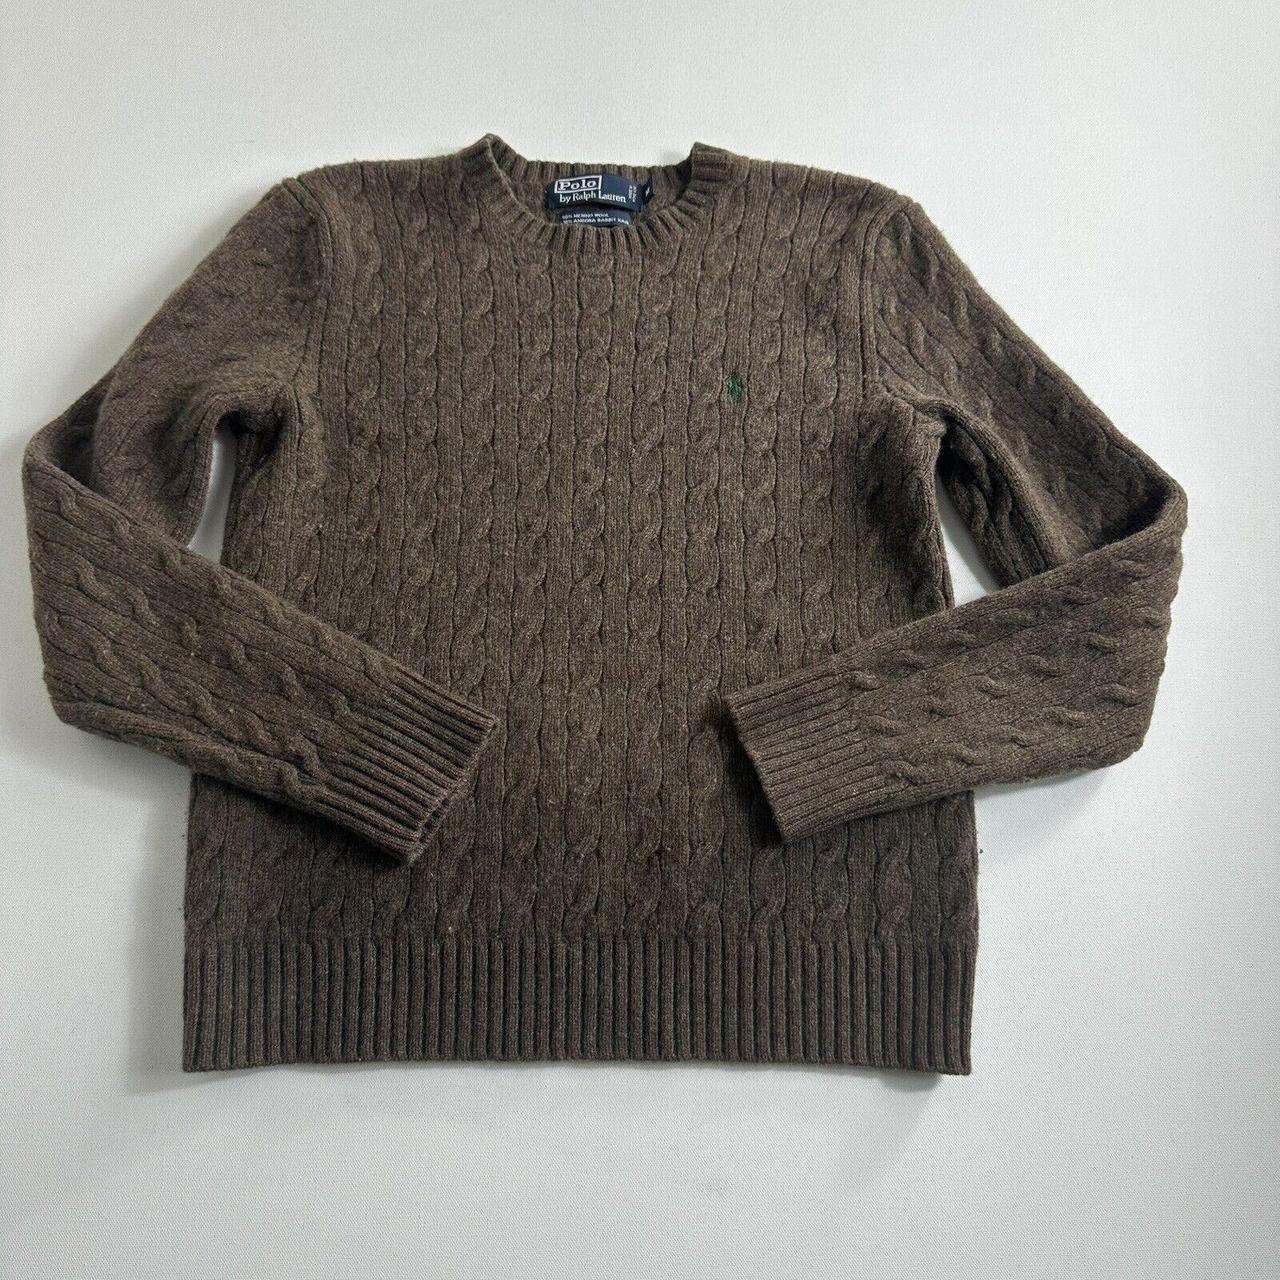 POLO RALPH LAUREN Cable Knit Sweater Merino Wool... - Depop